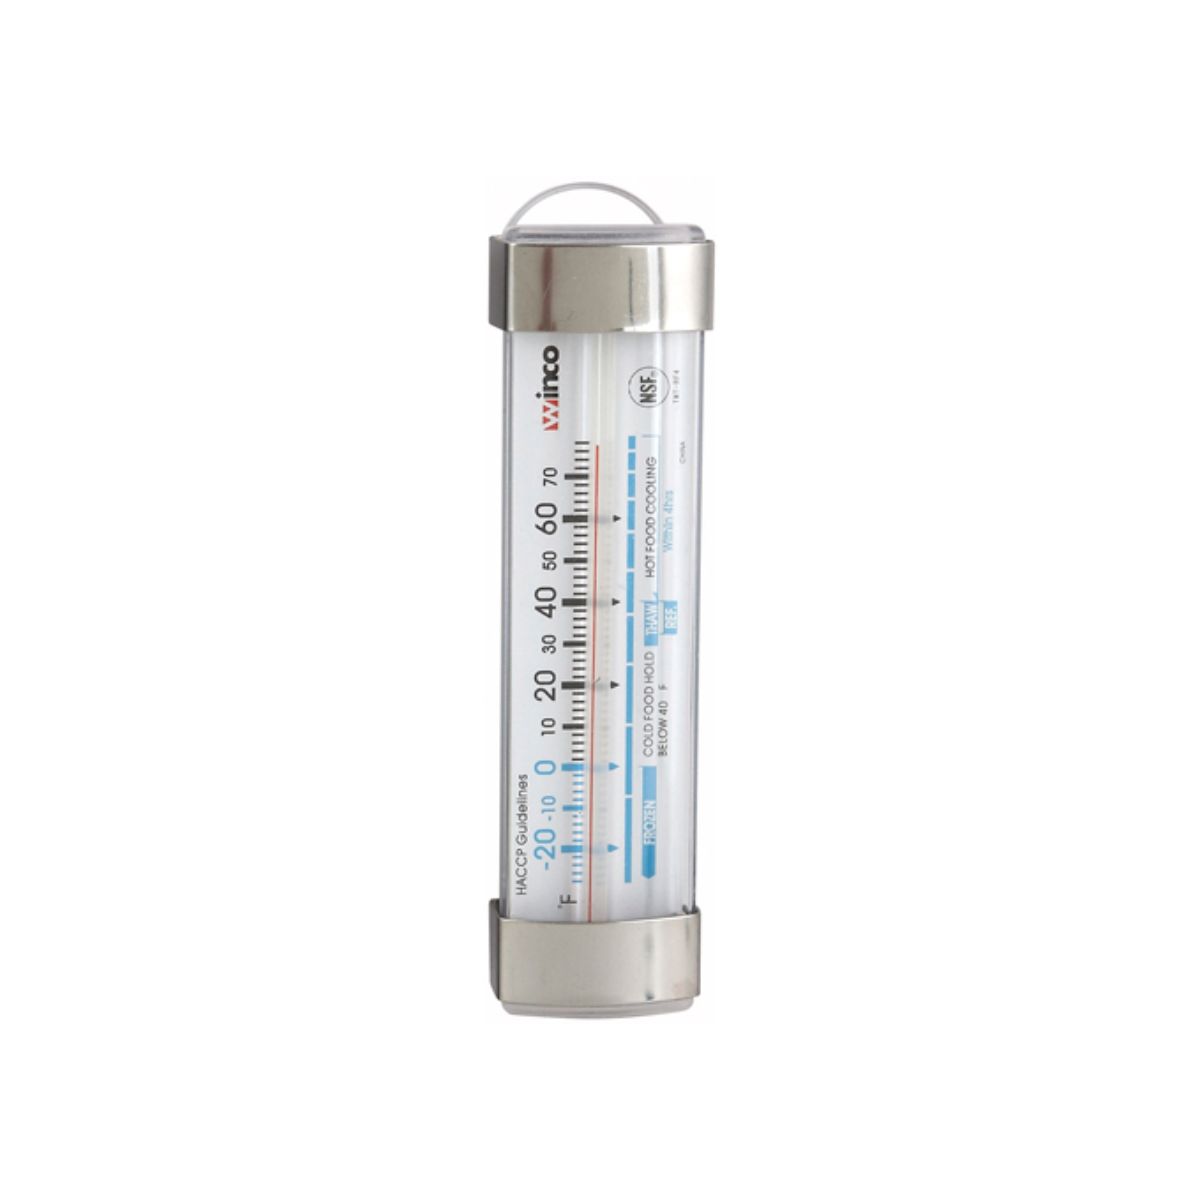 Winco Freezer/Refrigerator Thermometer 3.5"